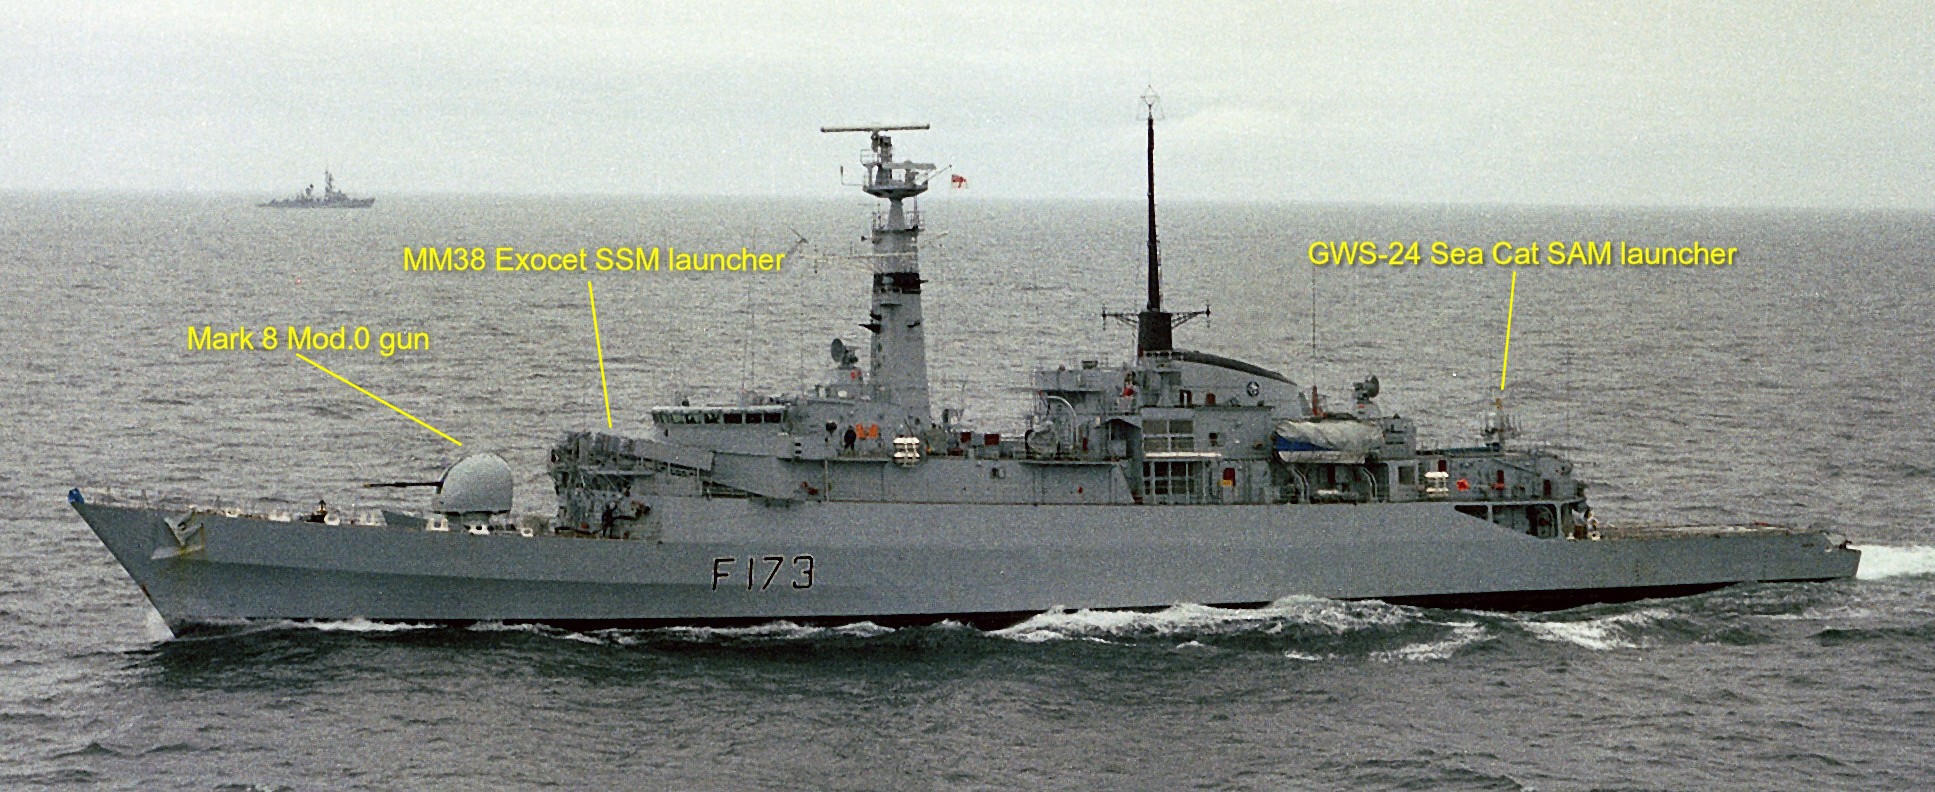 amazon class frigate type 21 armament mark 8 gun mm38 exocet ssm missile gws-24 sea cat sam launcher